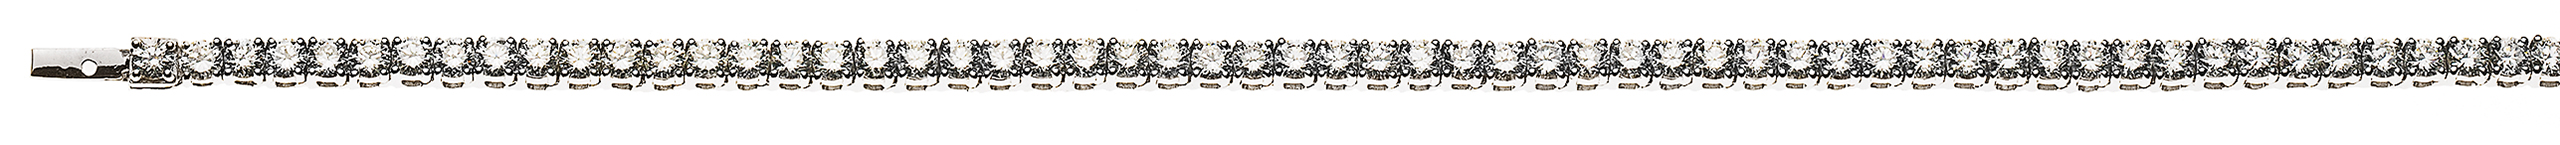 AURONOS Prestige Bracelet 18K White Gold 70 Diamonds 3.95ct 18cm